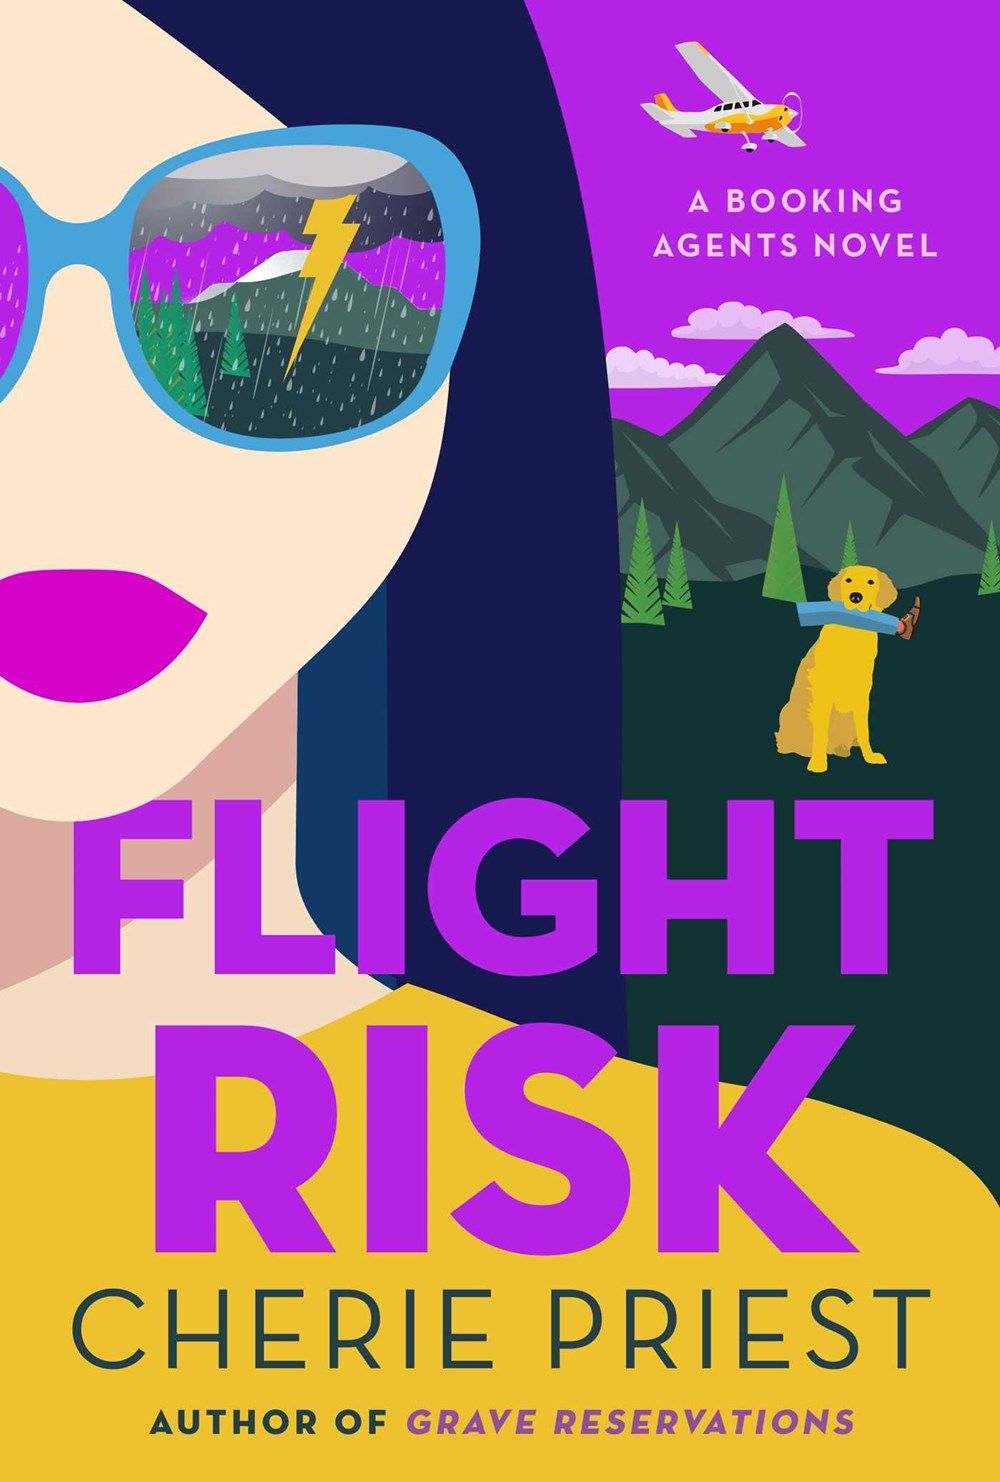 Flight Risk book cover